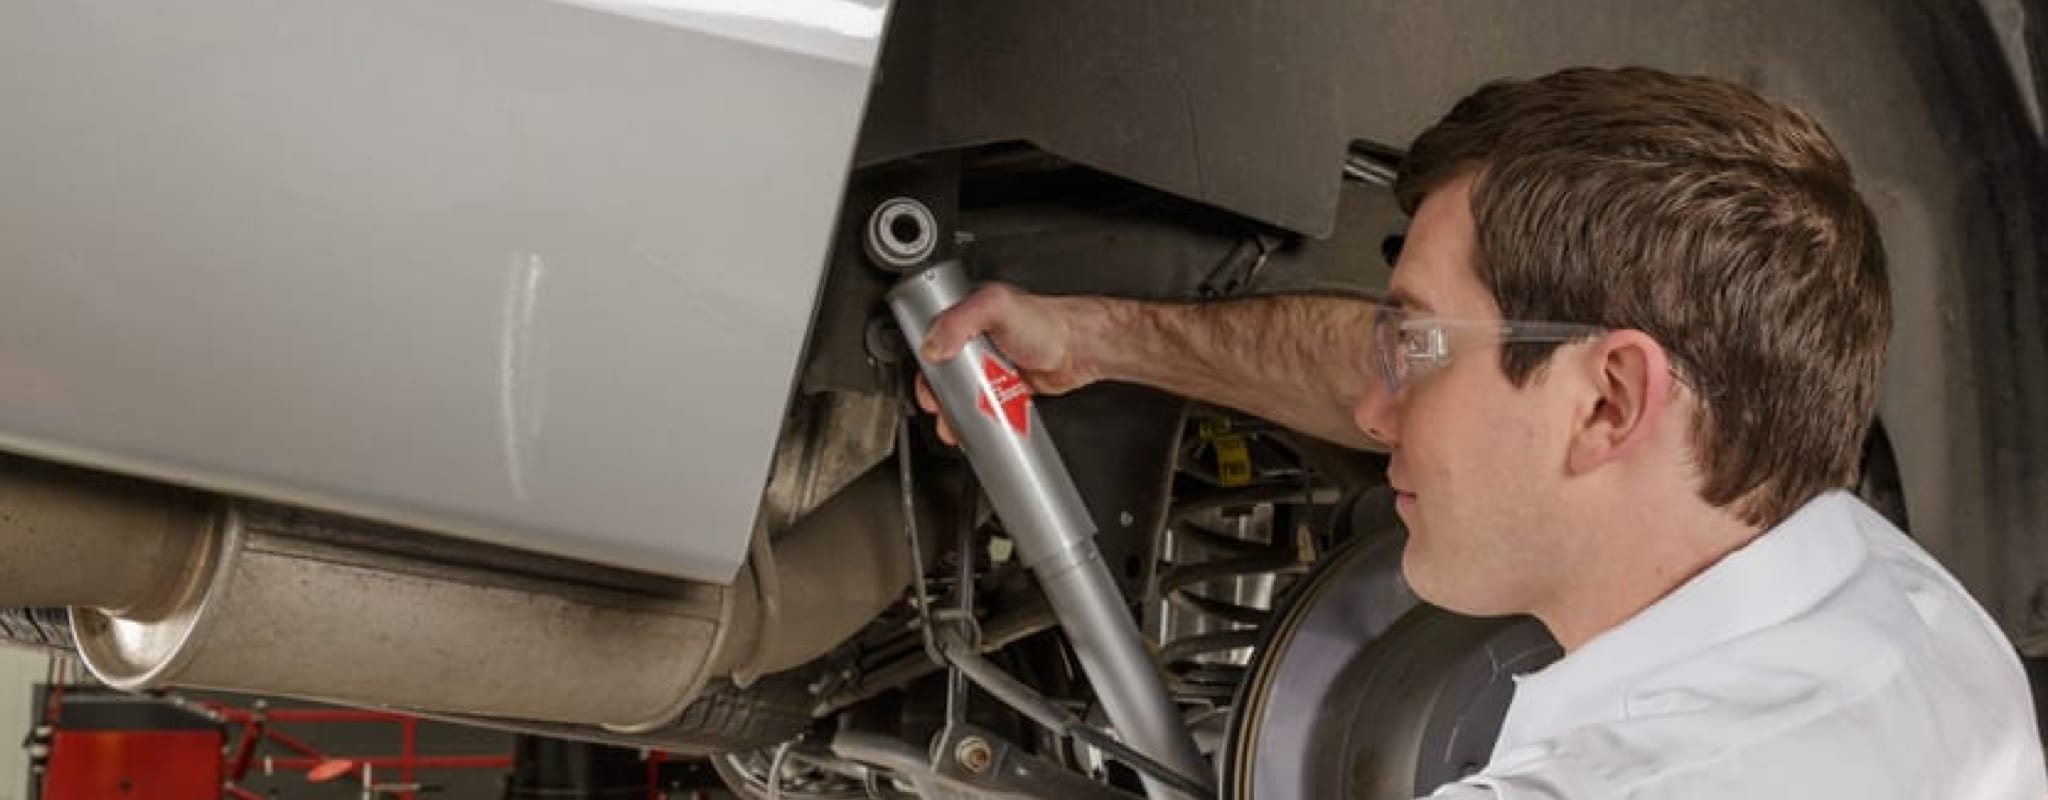 A Les Schwab technician inspecting a car's shocks